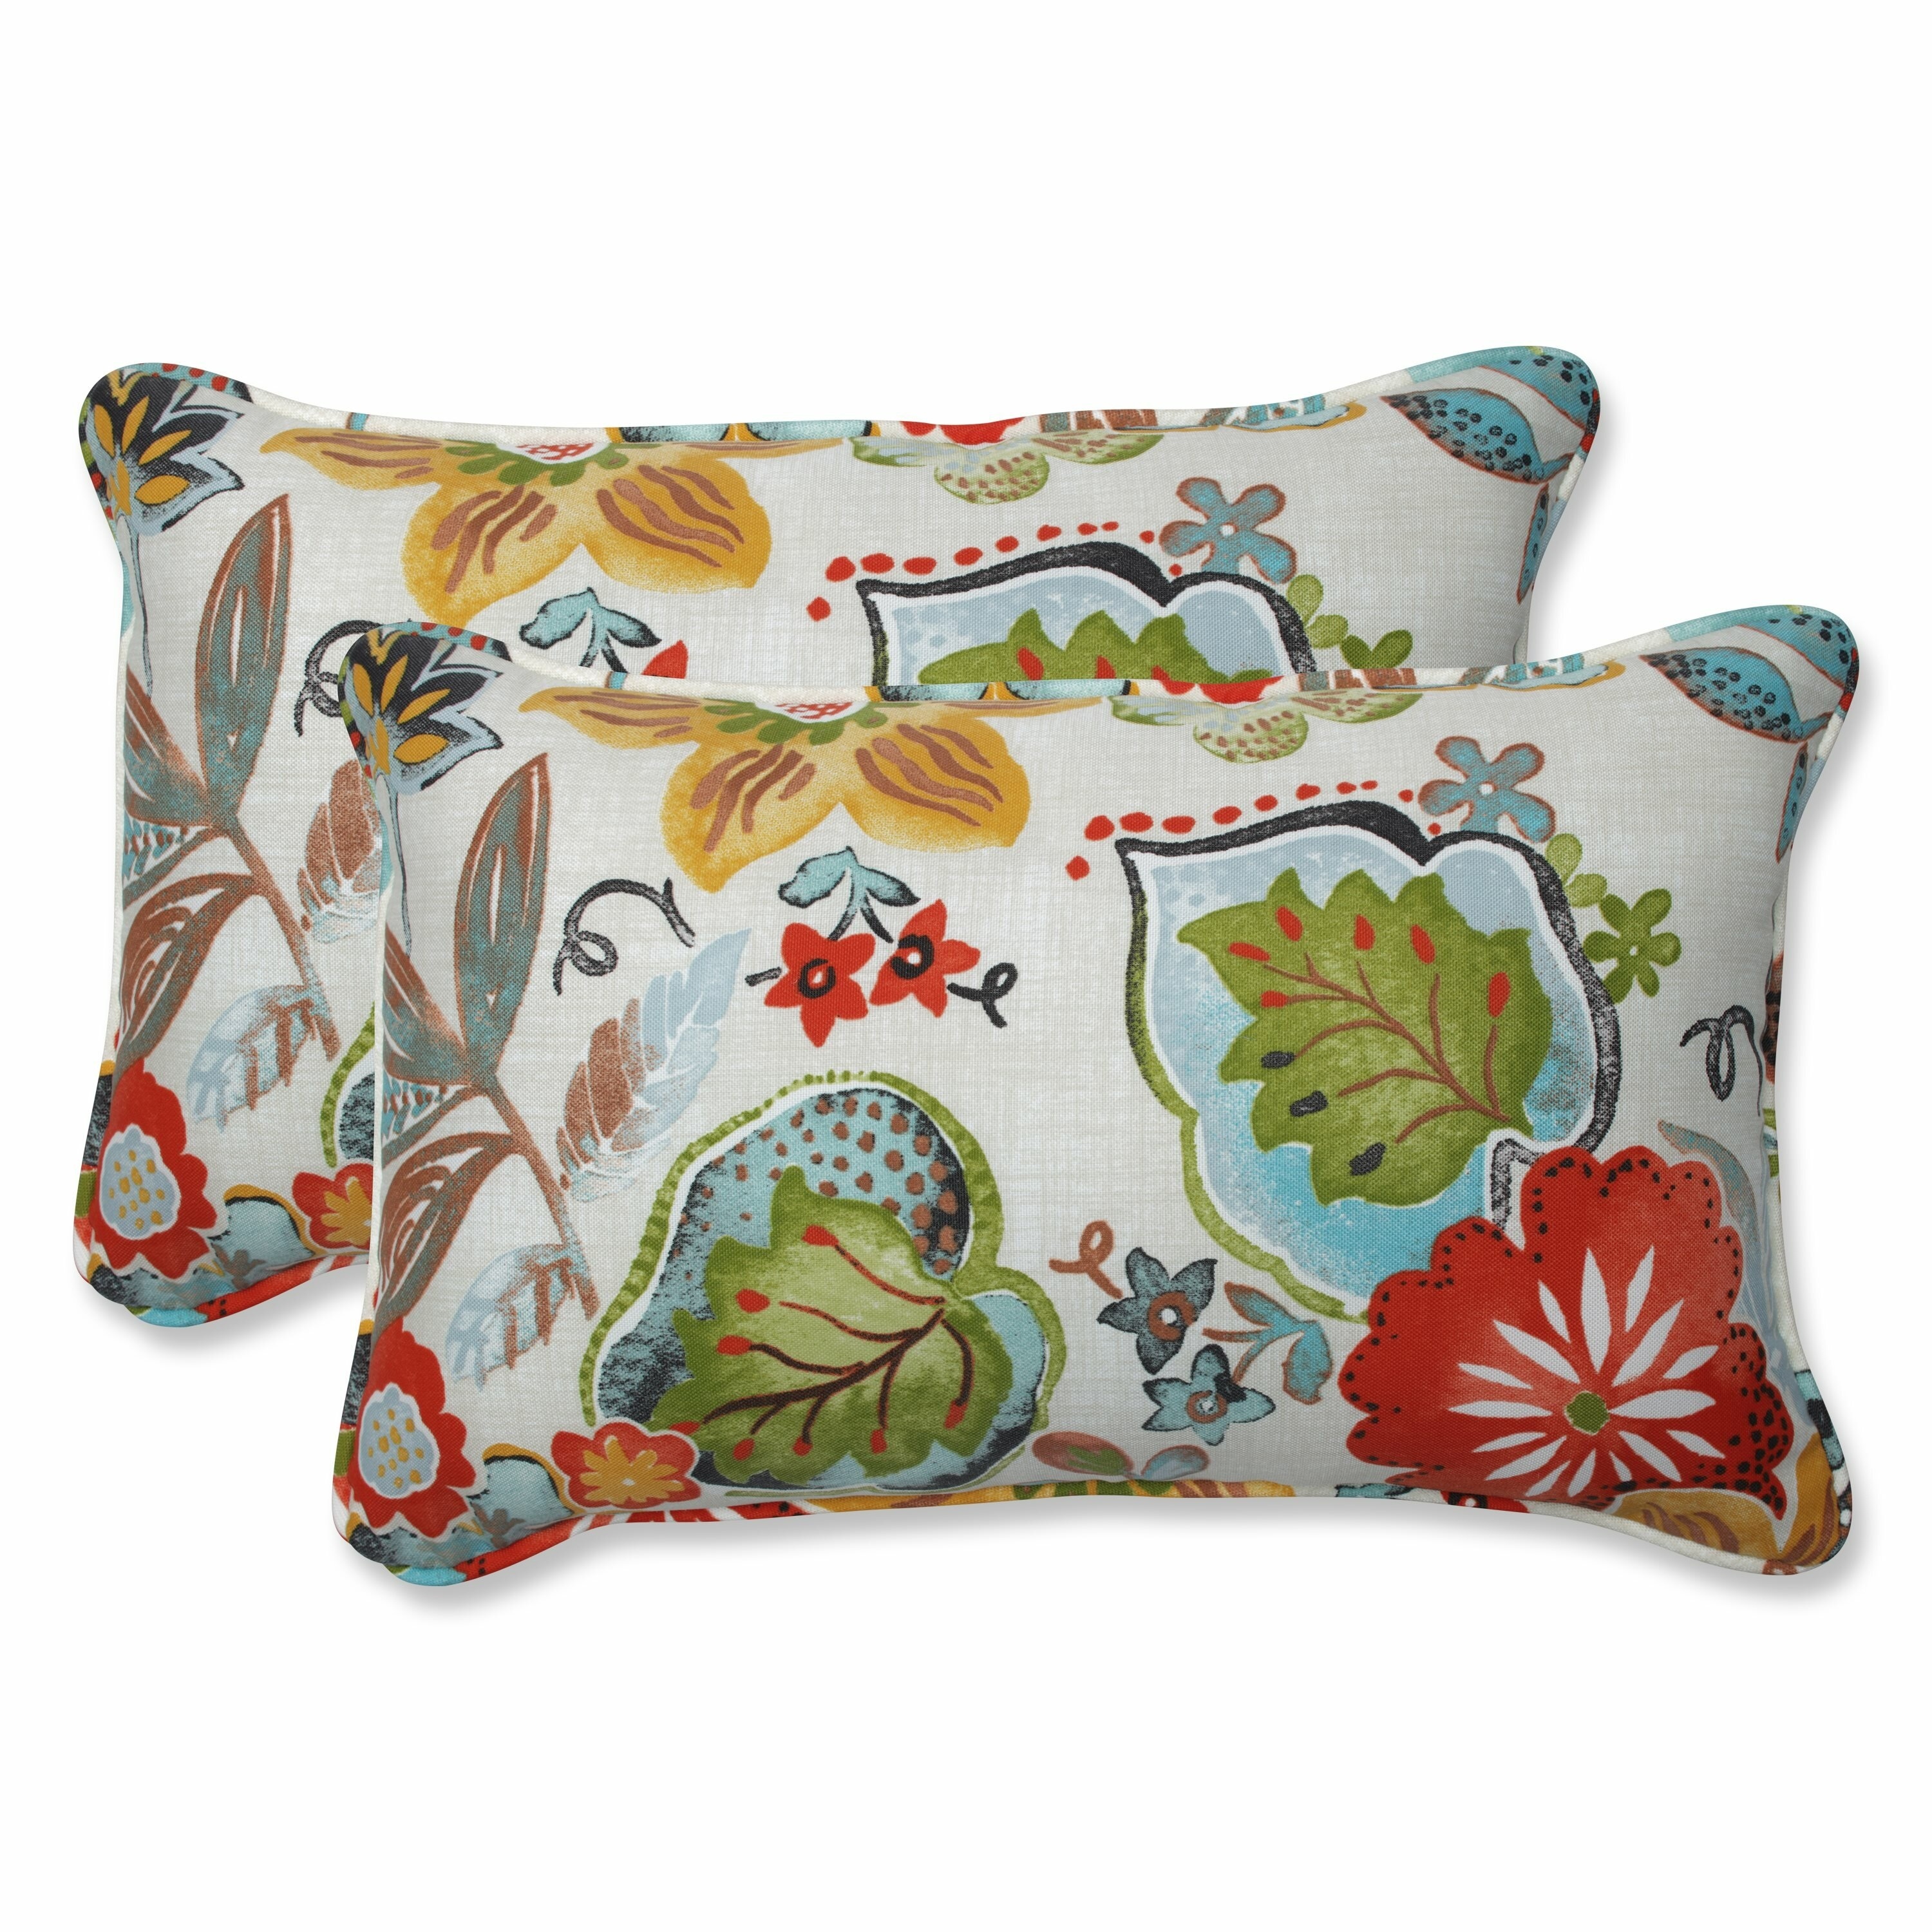 https://visualhunt.com/photos/23/osian-floral-indoor-outdoor-throw-pillow.jpg